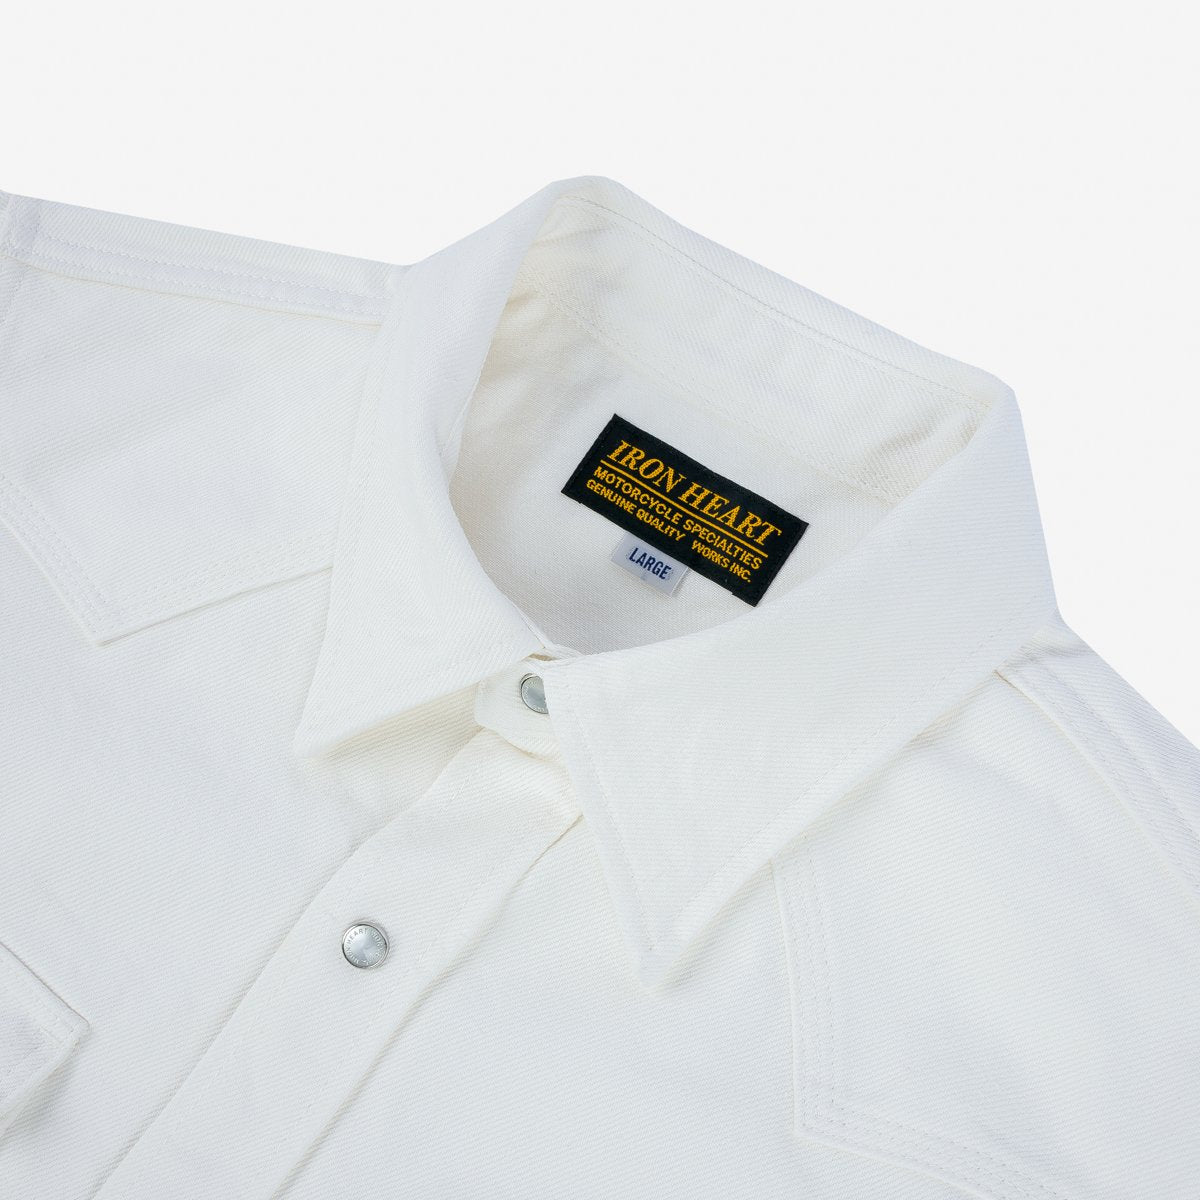 Iron Heart IHSH-384-WHT 13.5oz Cotton Twill Western Shirt - White